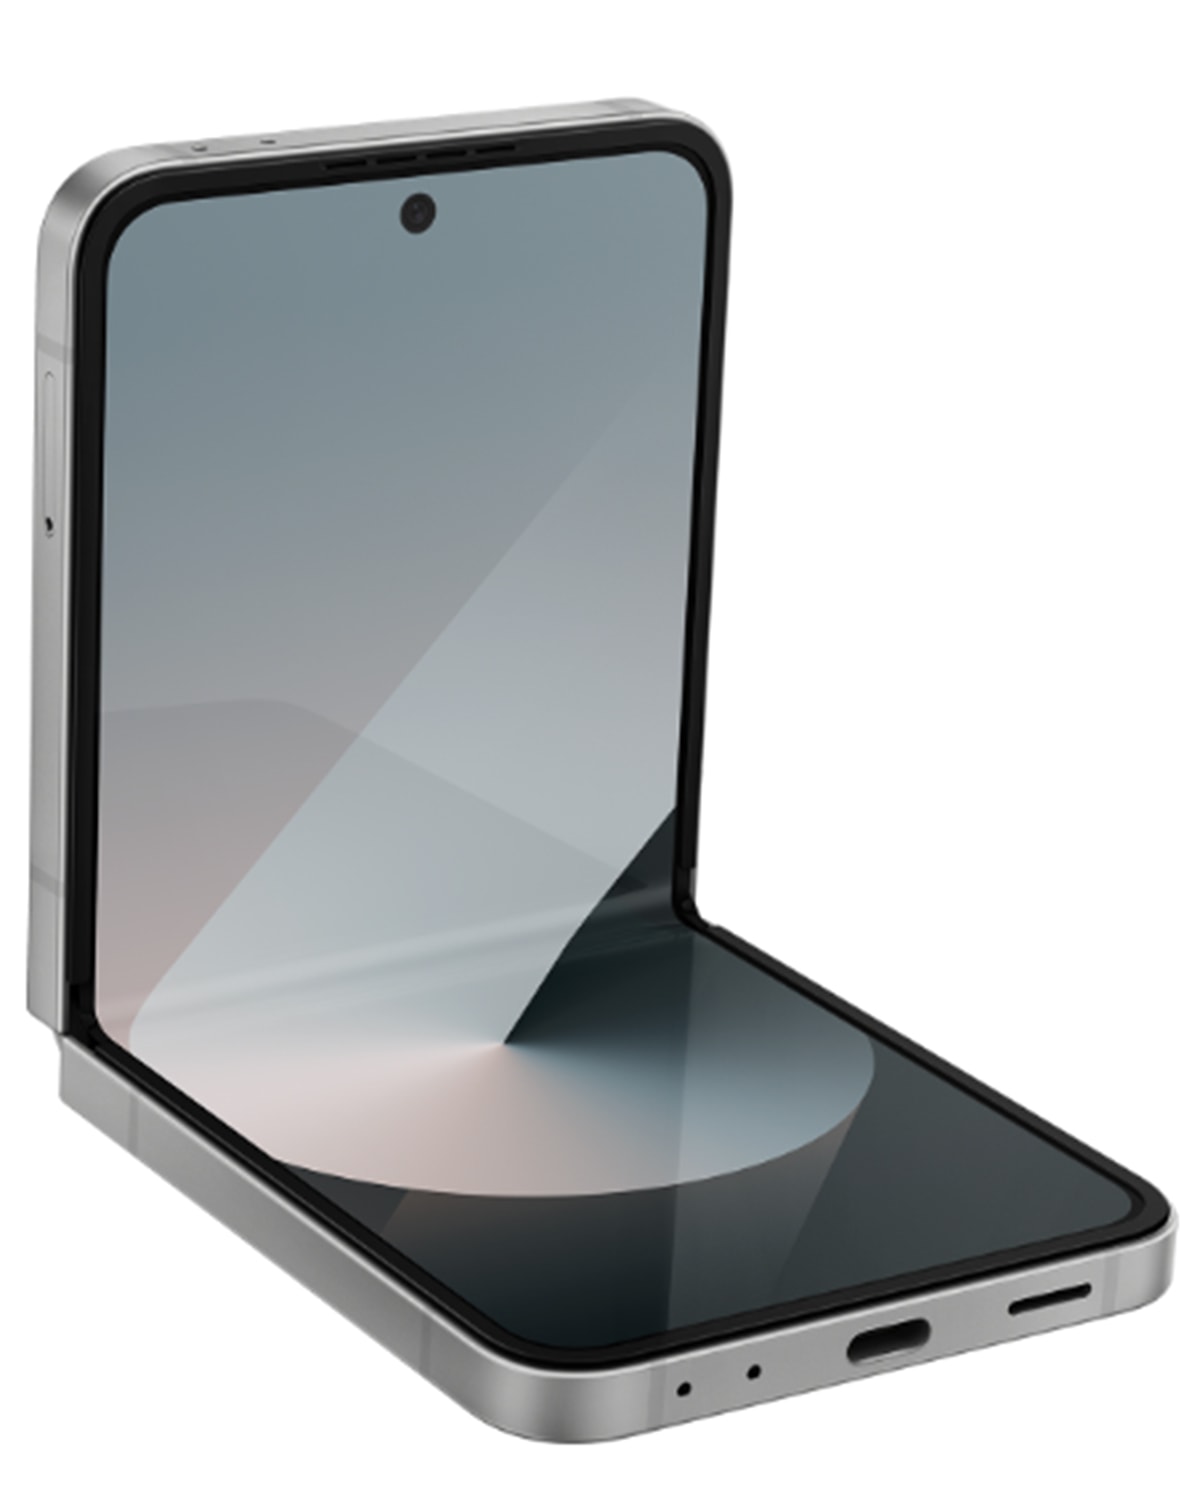 SAMSUNG Smartphone Galaxy ZFlip 6 256go Gris - GALAXY-ZFLIP6-256-GR